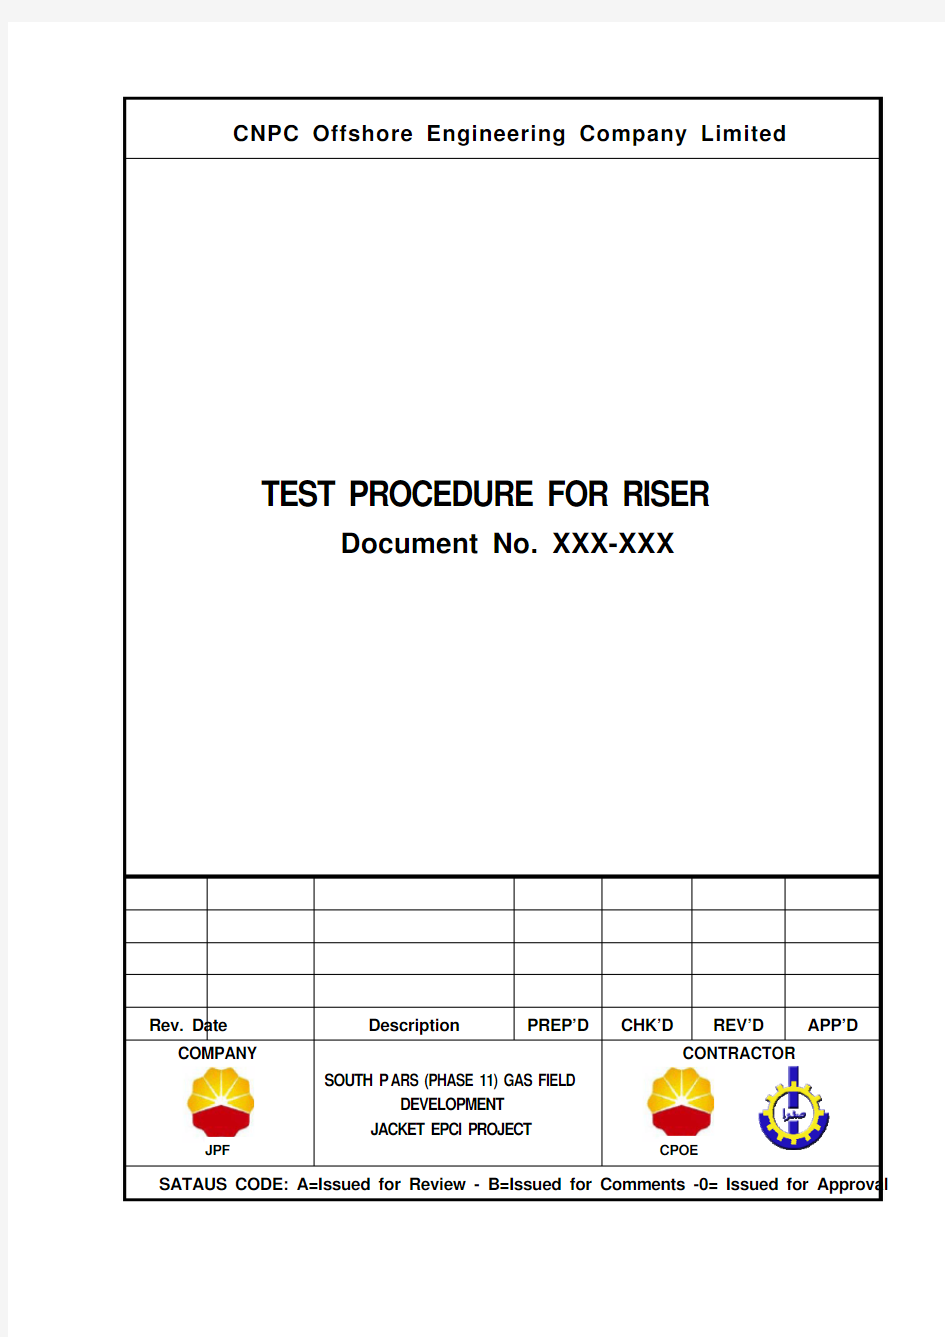 4.2 TEST PROCEDURE FOR RISER